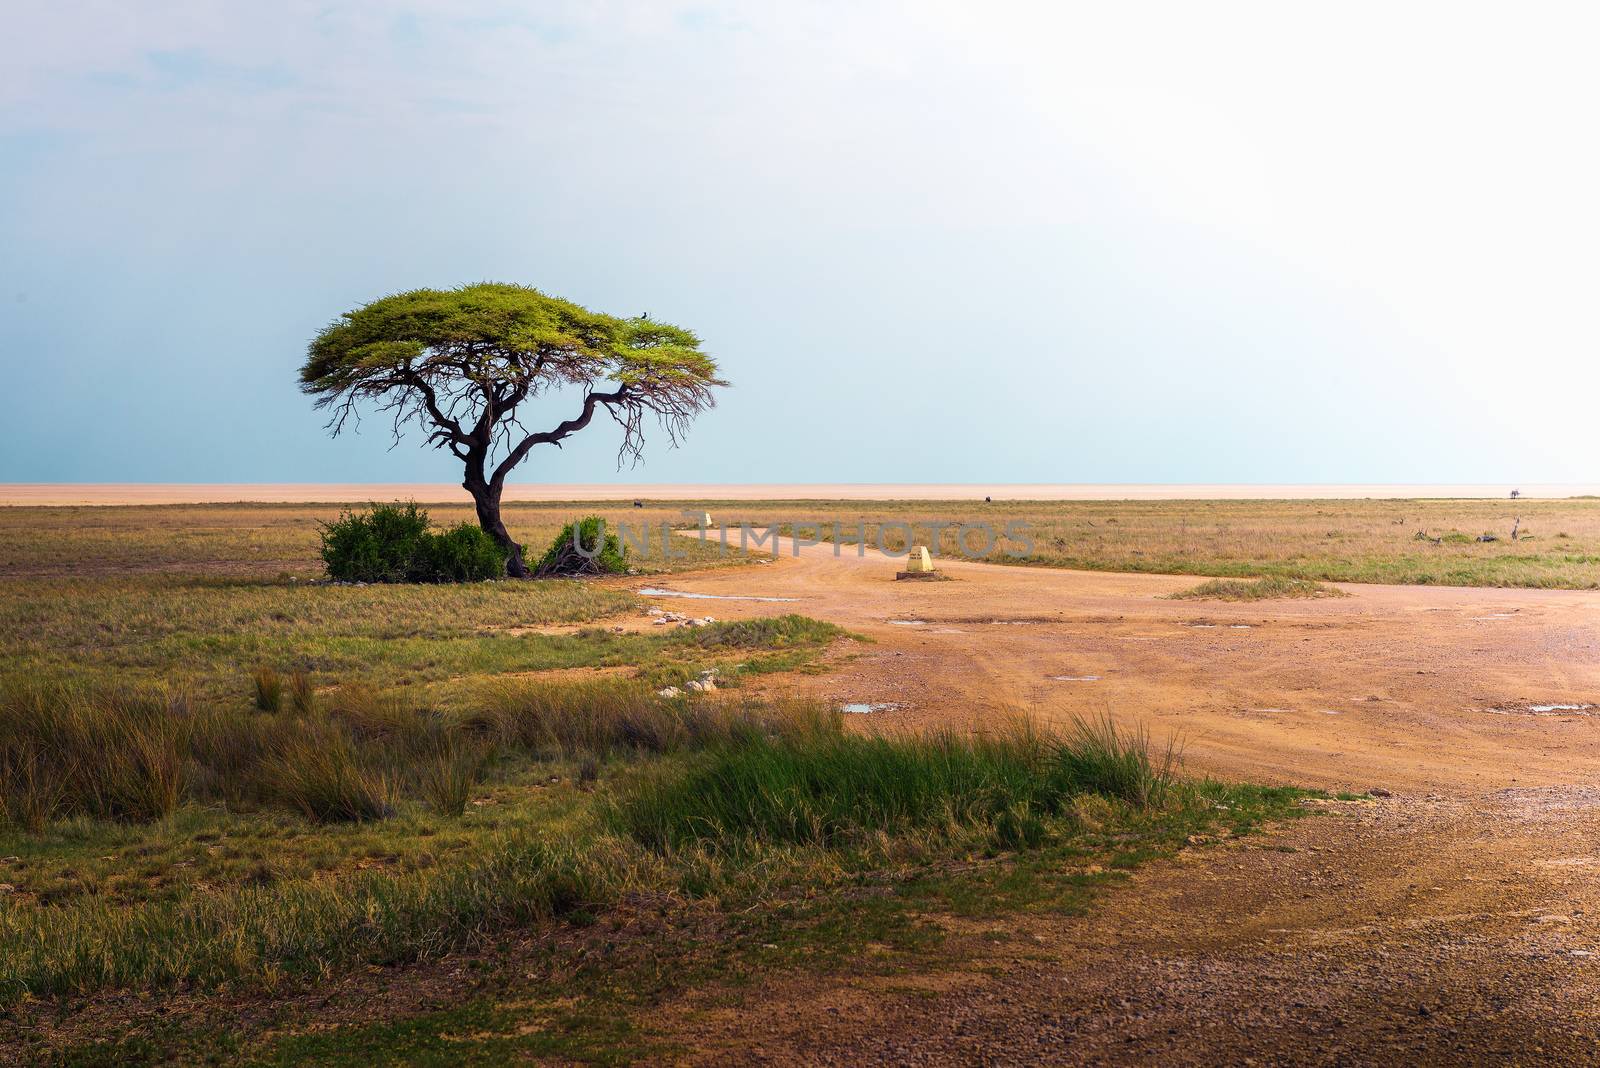 Lonely acacia tree in Etosha National Park, Namibia, Africa by nickfox